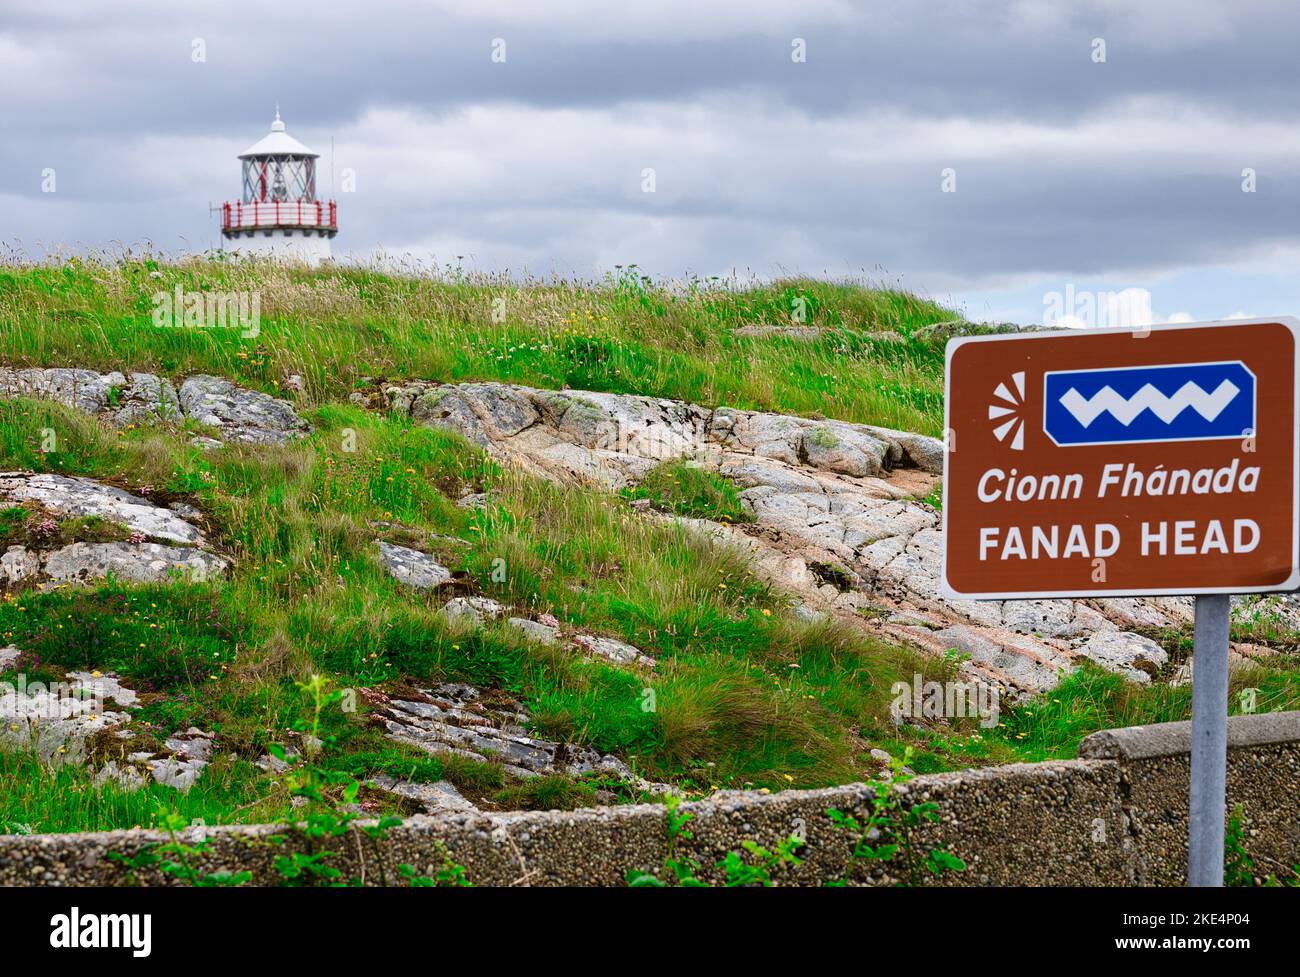 Sign in Gaelic at Fanad Head Lighthouse on the Wild Atlantic Way, Fanad Head, Fanad Peninsula, County Donegal, Ireland Stock Photo